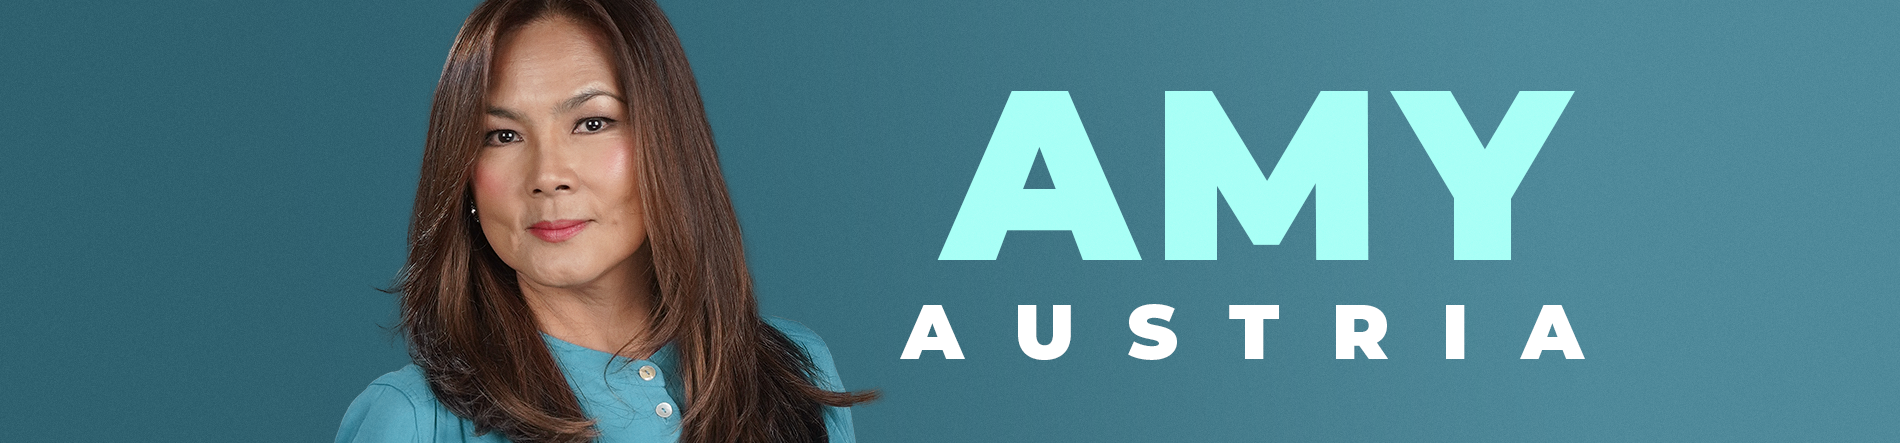 Amy Austria Desktop Banner